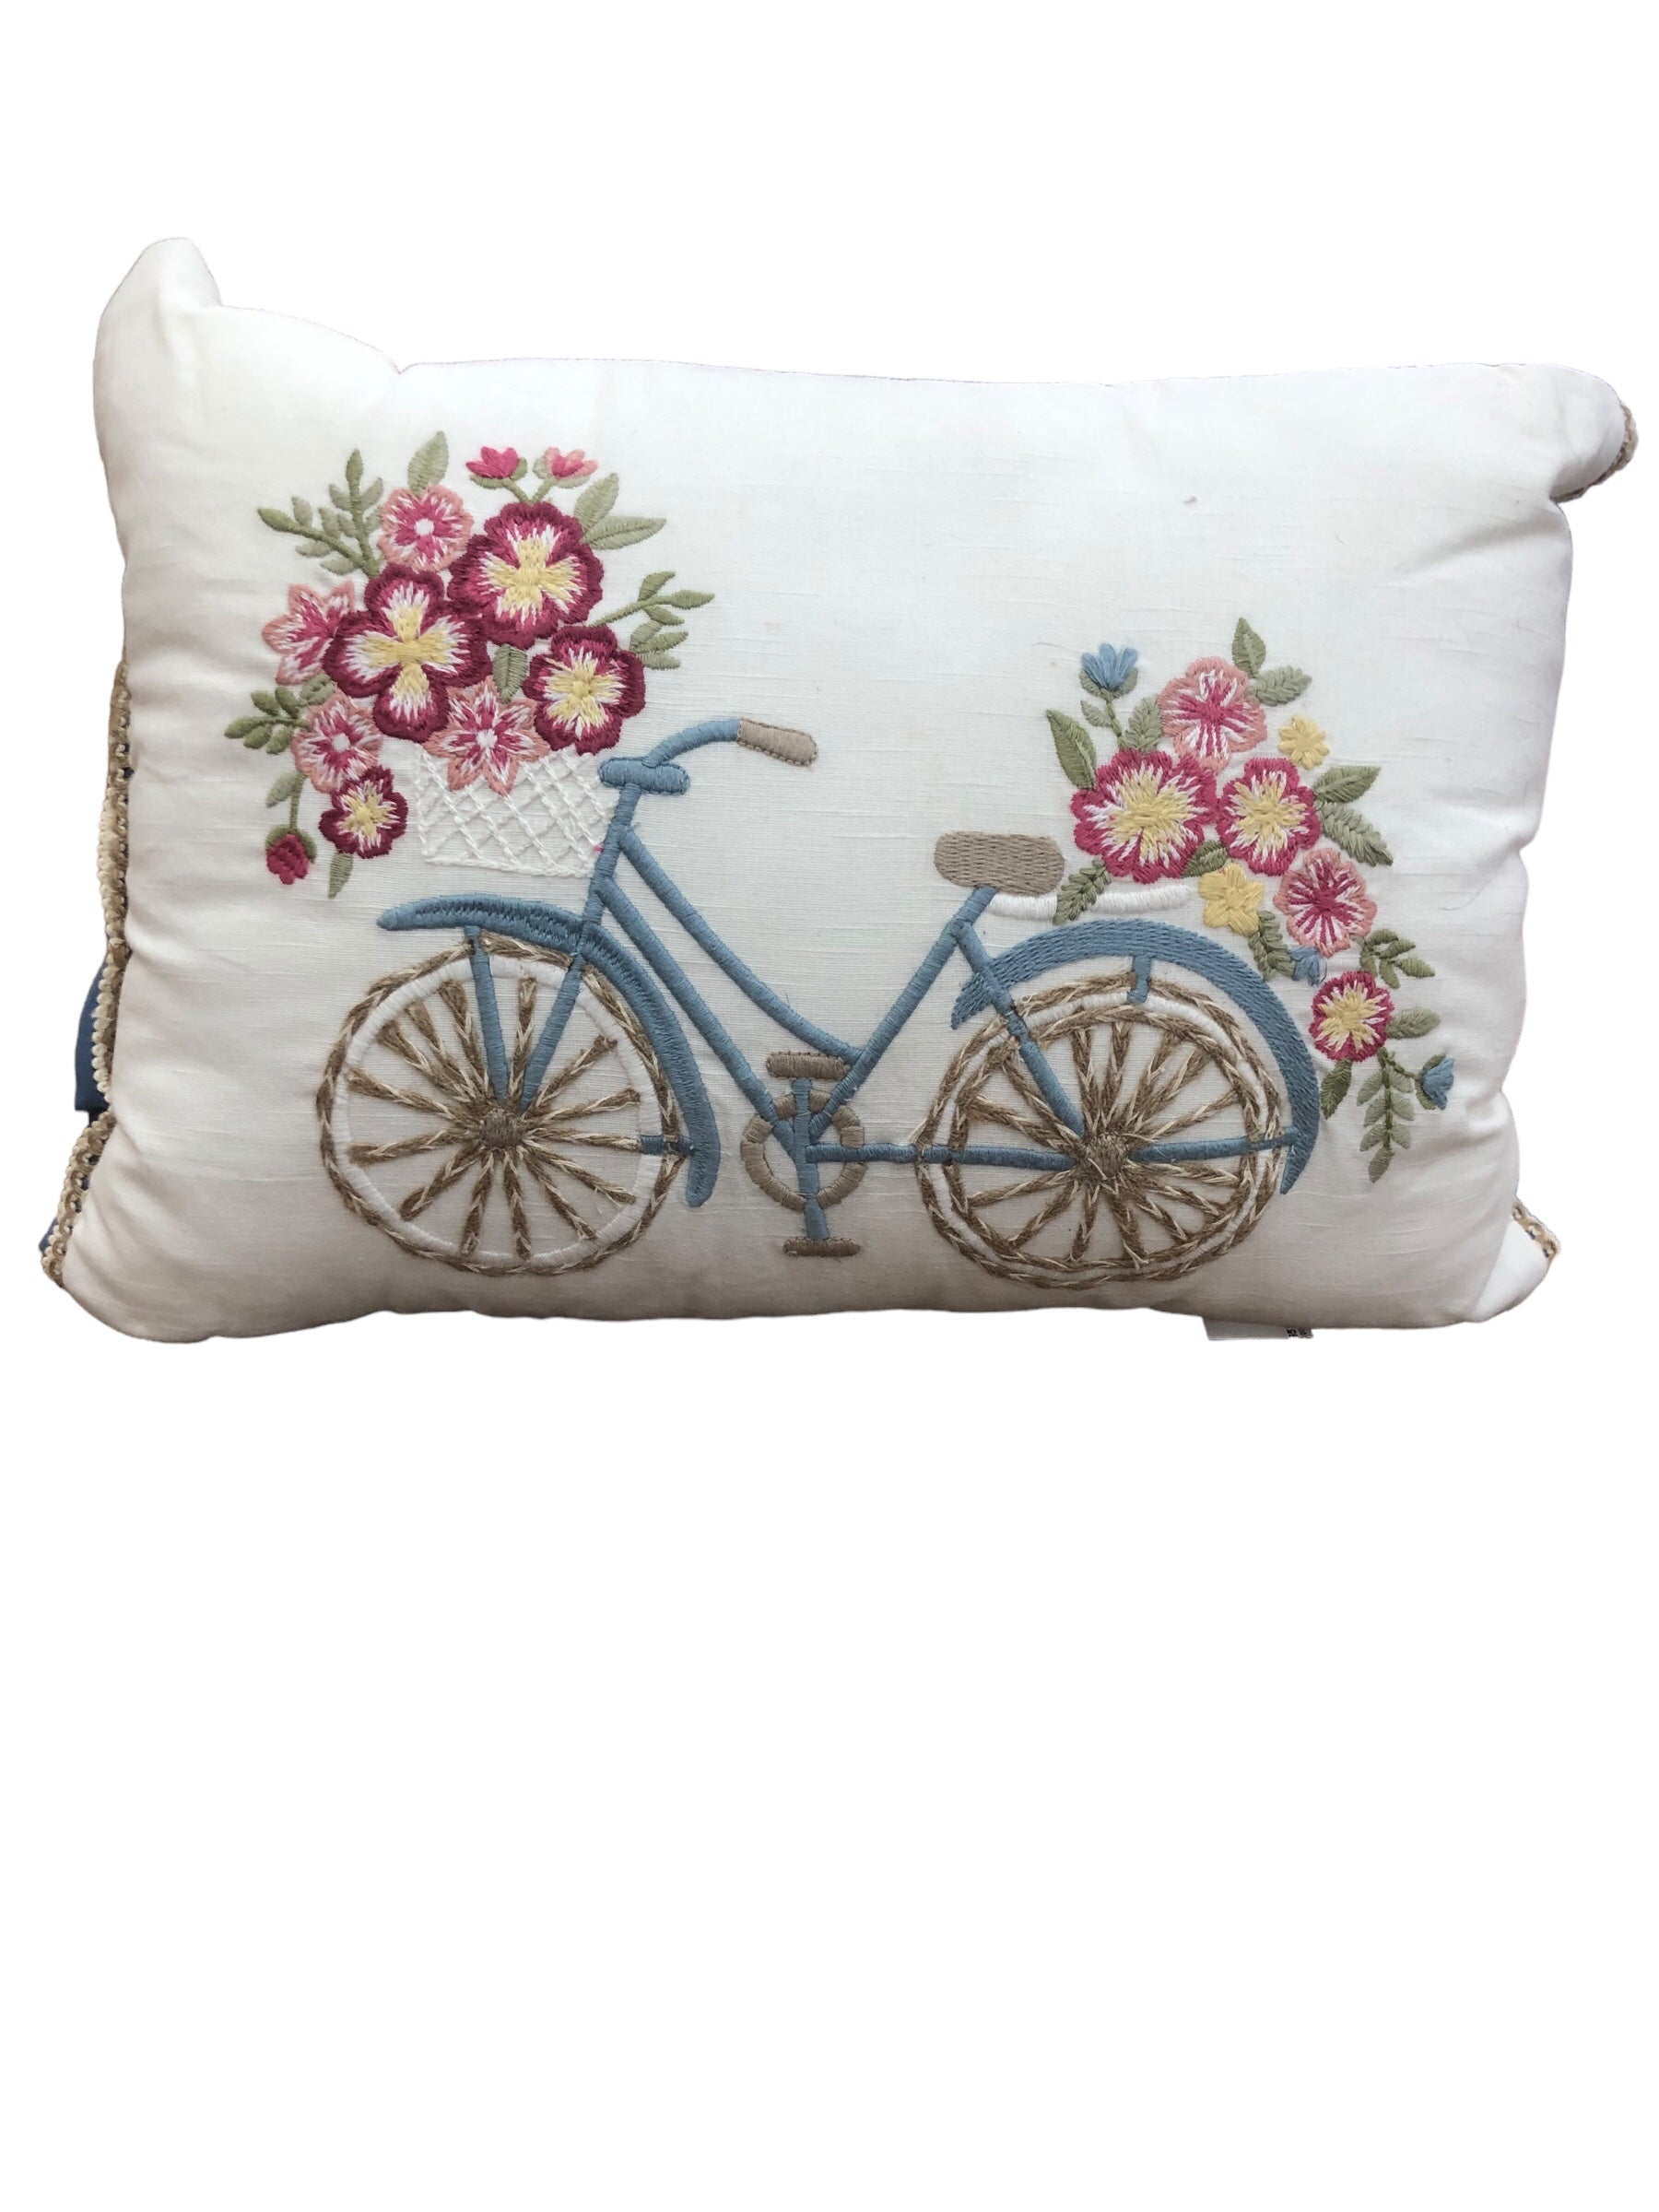 Bike on a Pillow